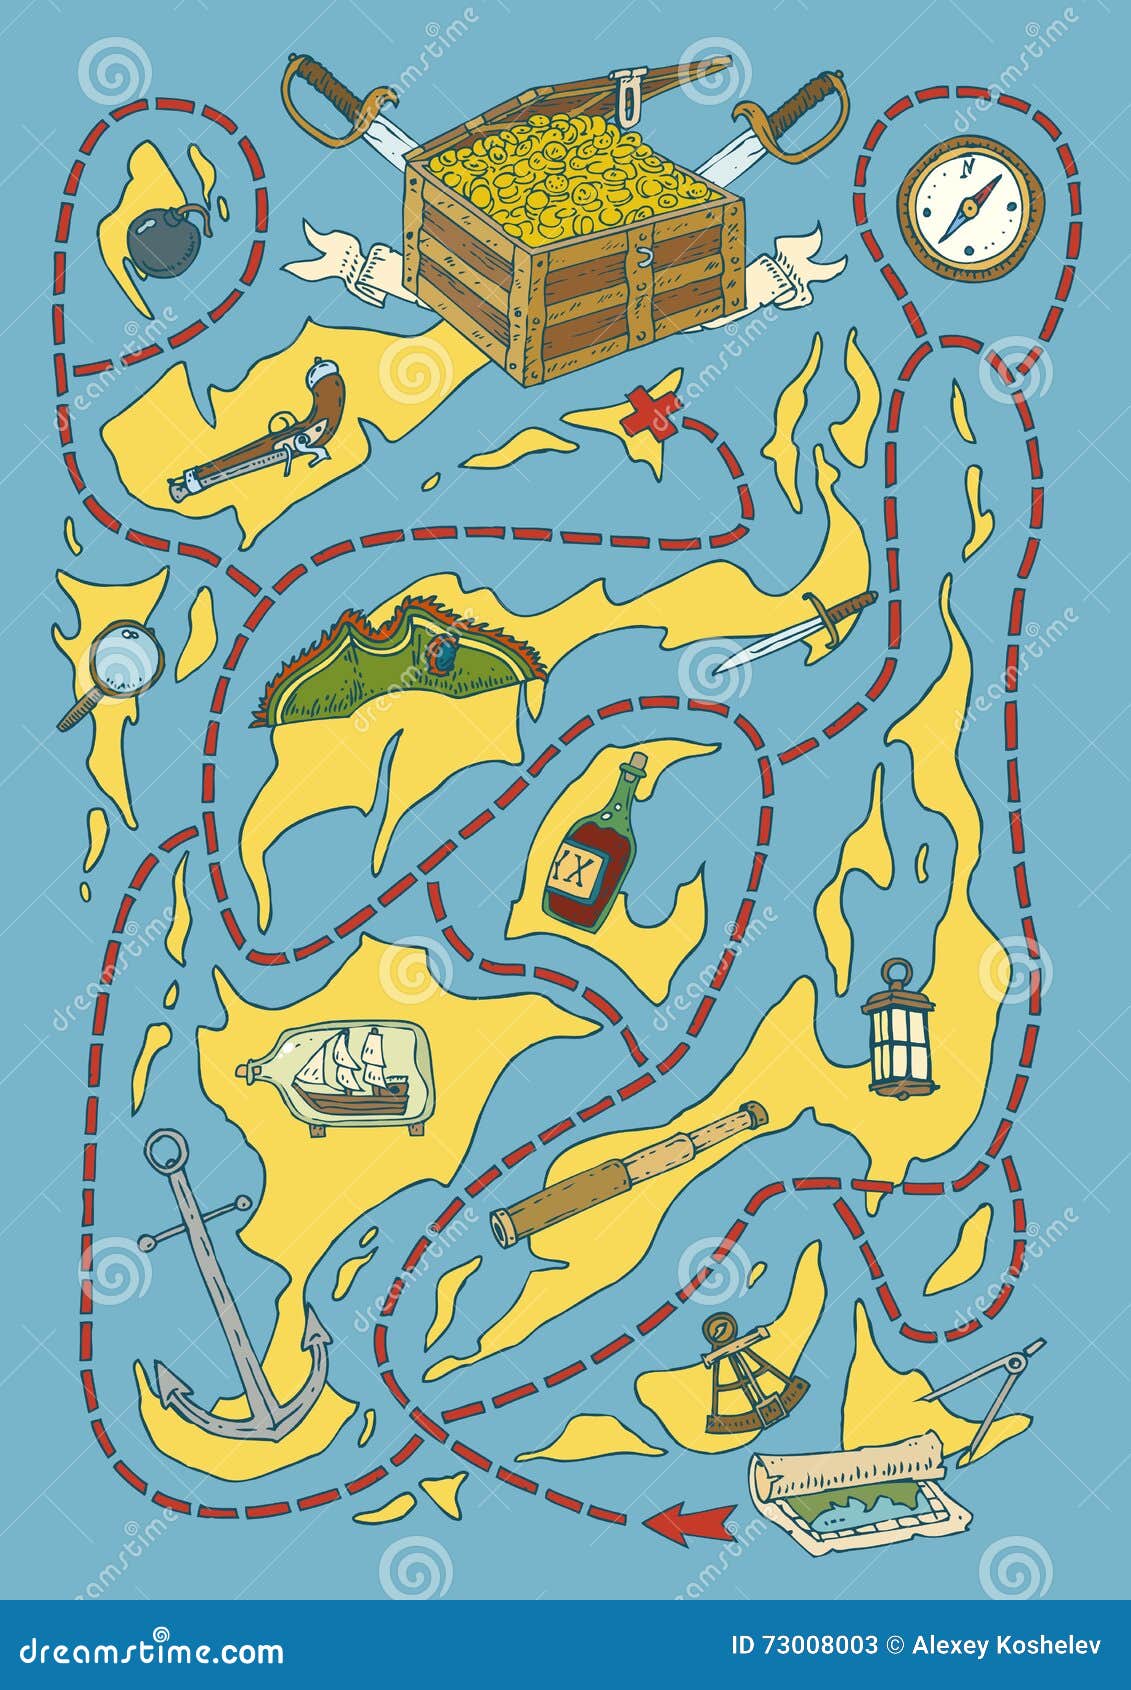 treasure island map maze game stock illustration illustration of